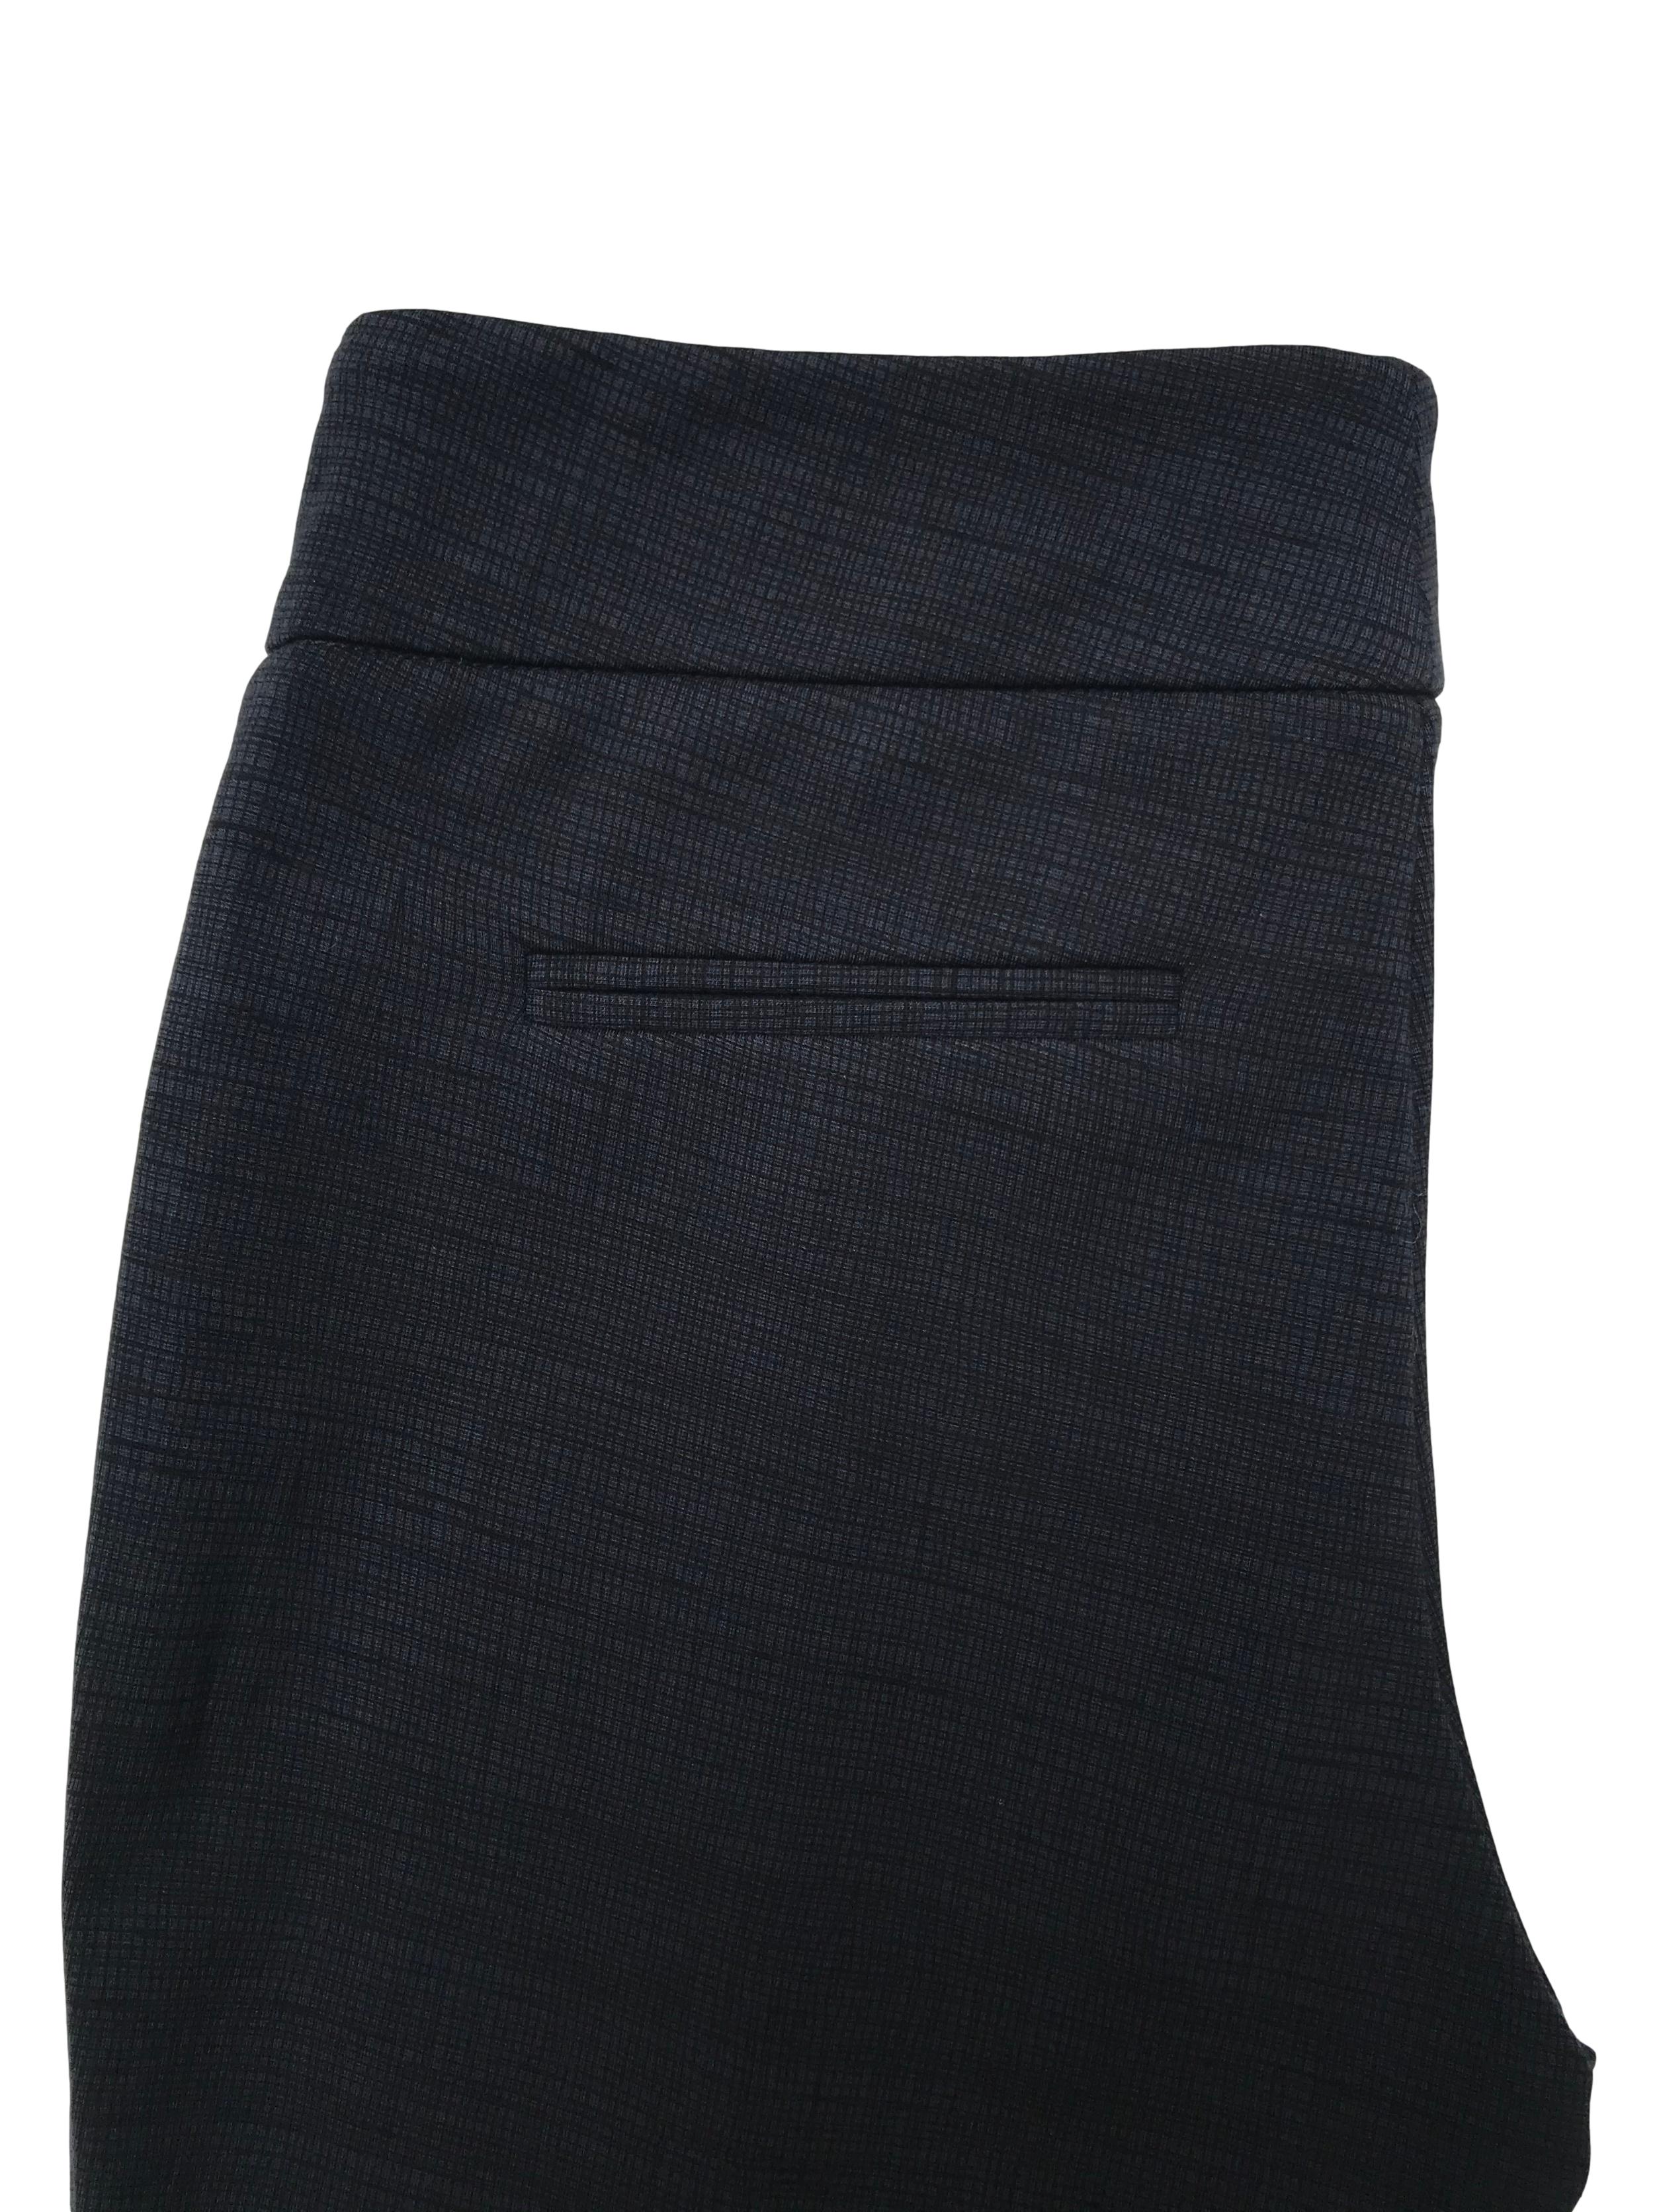 Legging stretch azul con líneas negras cruzadas, costura al medio de la pierna y bolsillos falsos atrás. Tiro medio pretina 76cm 